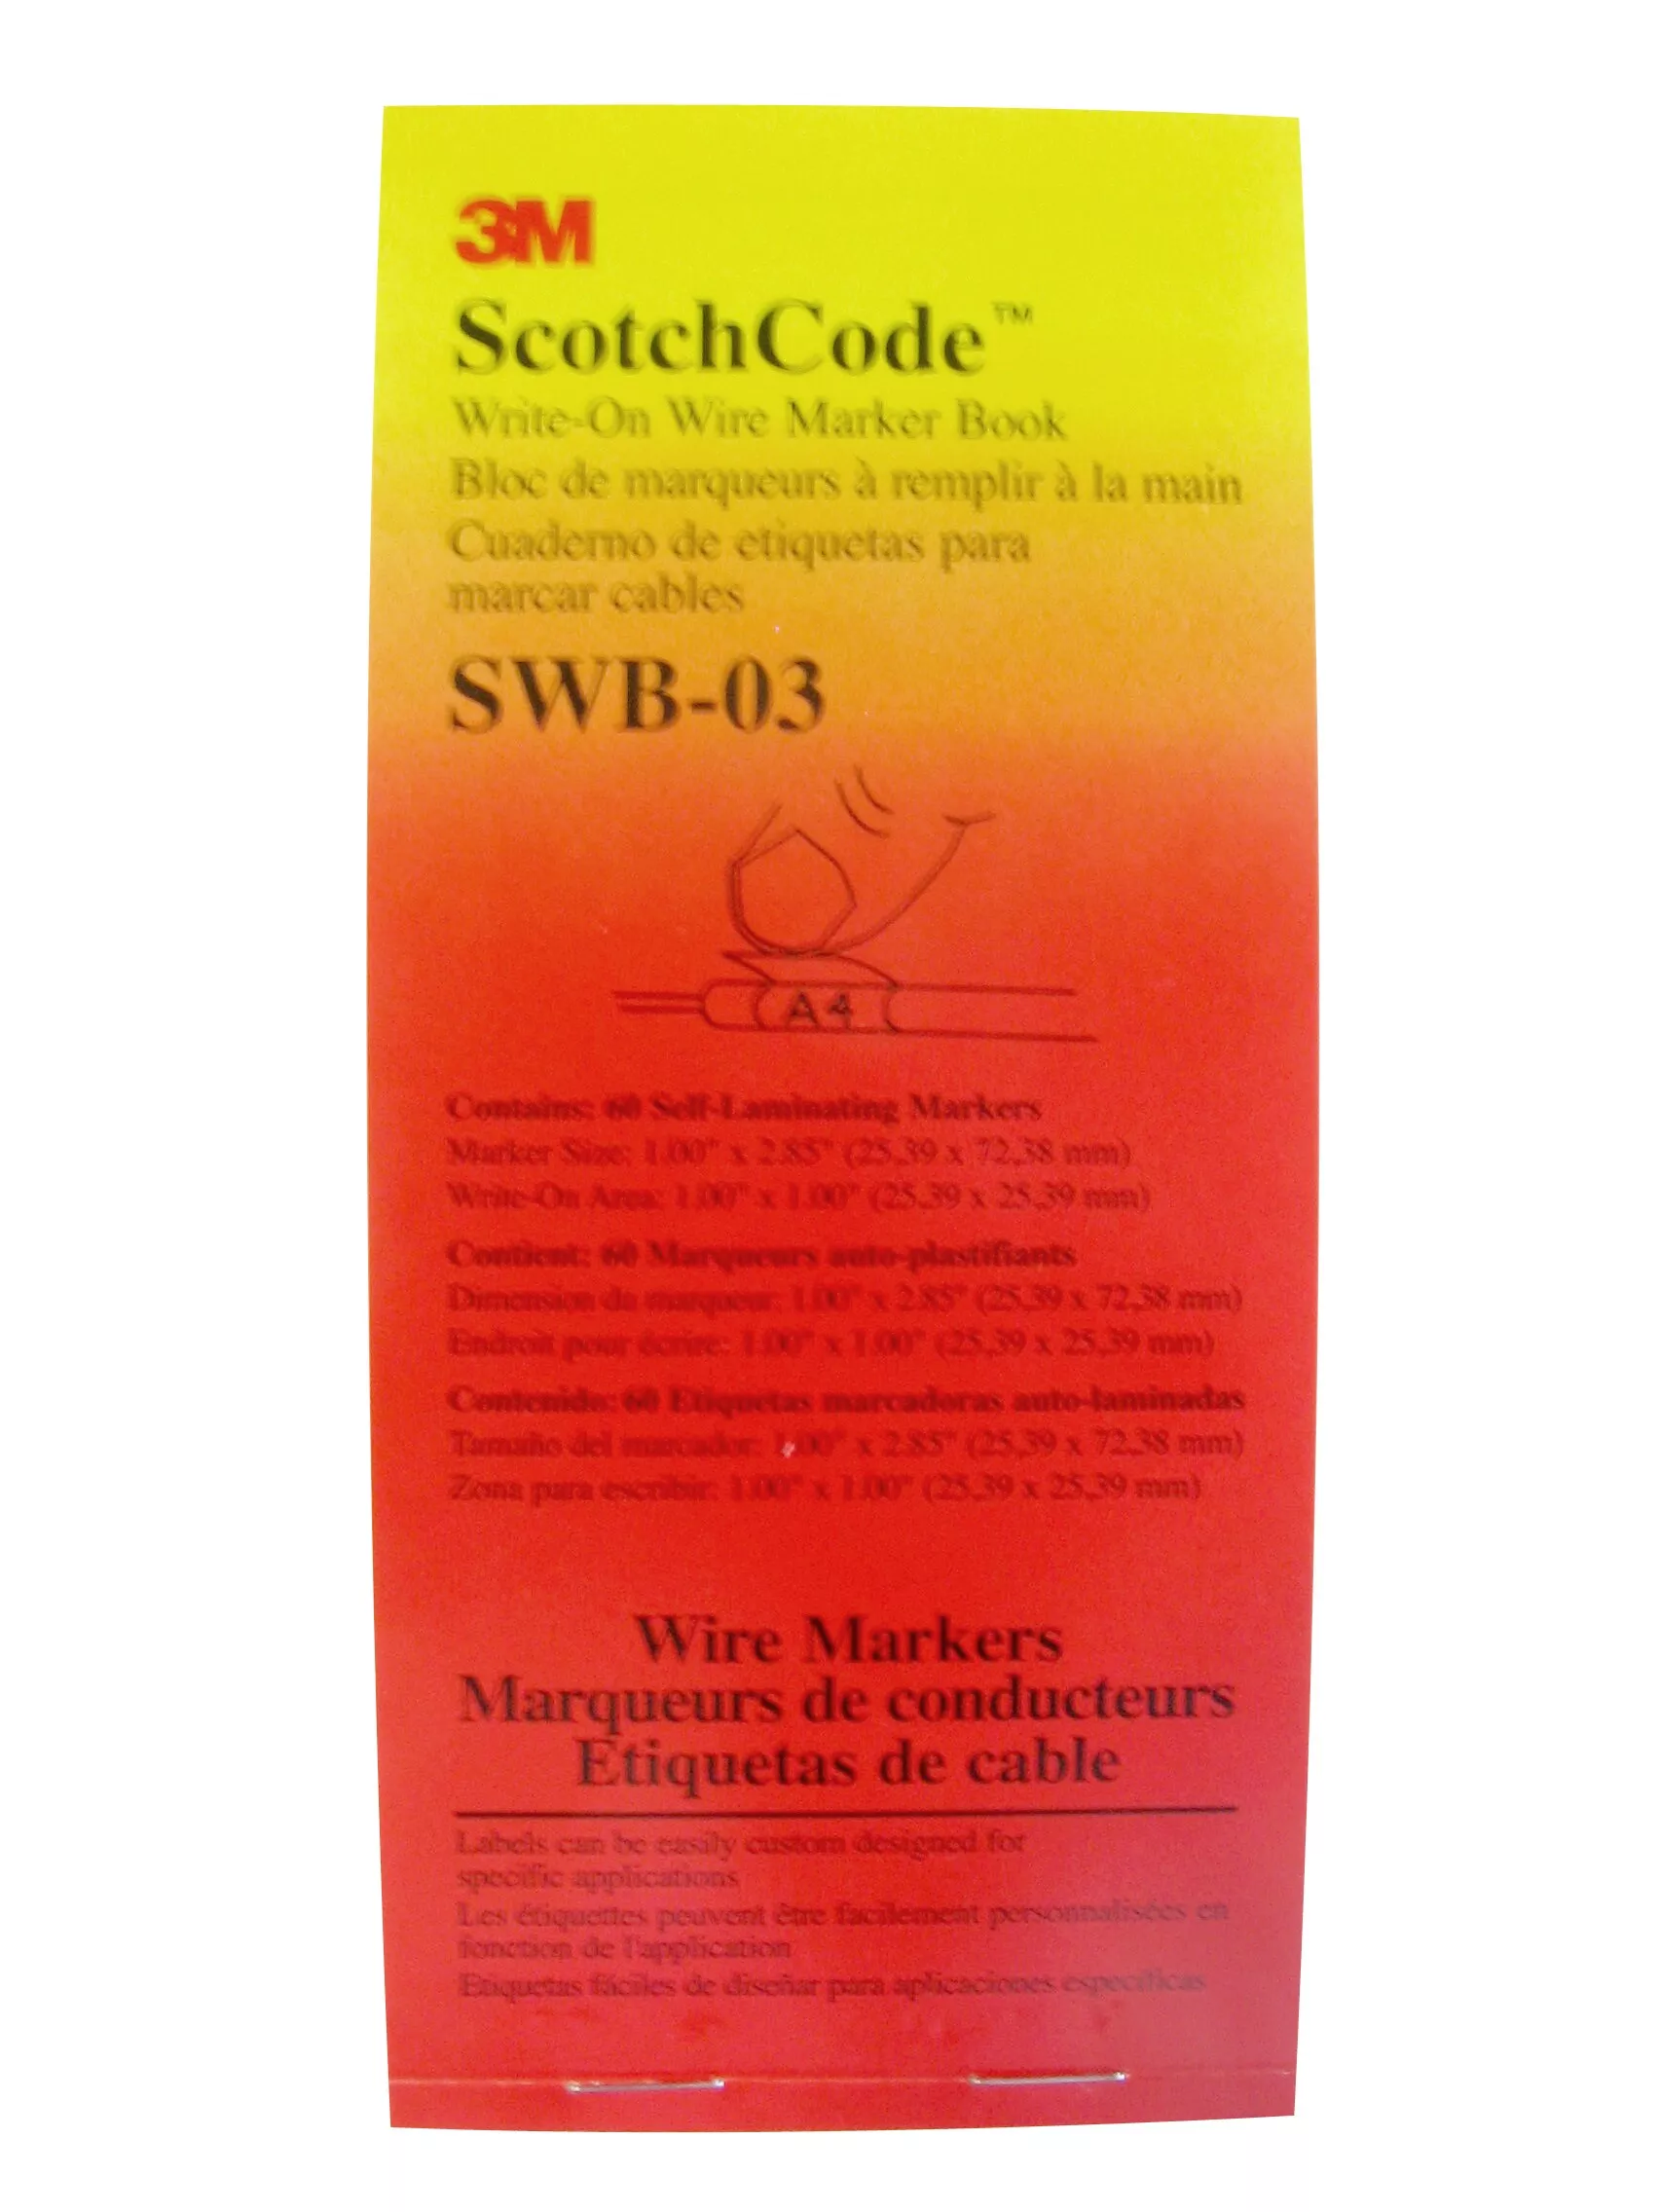 SKU 7000058802 | 3M™ ScotchCode™ Write-On Wire Marker Book SWB-03